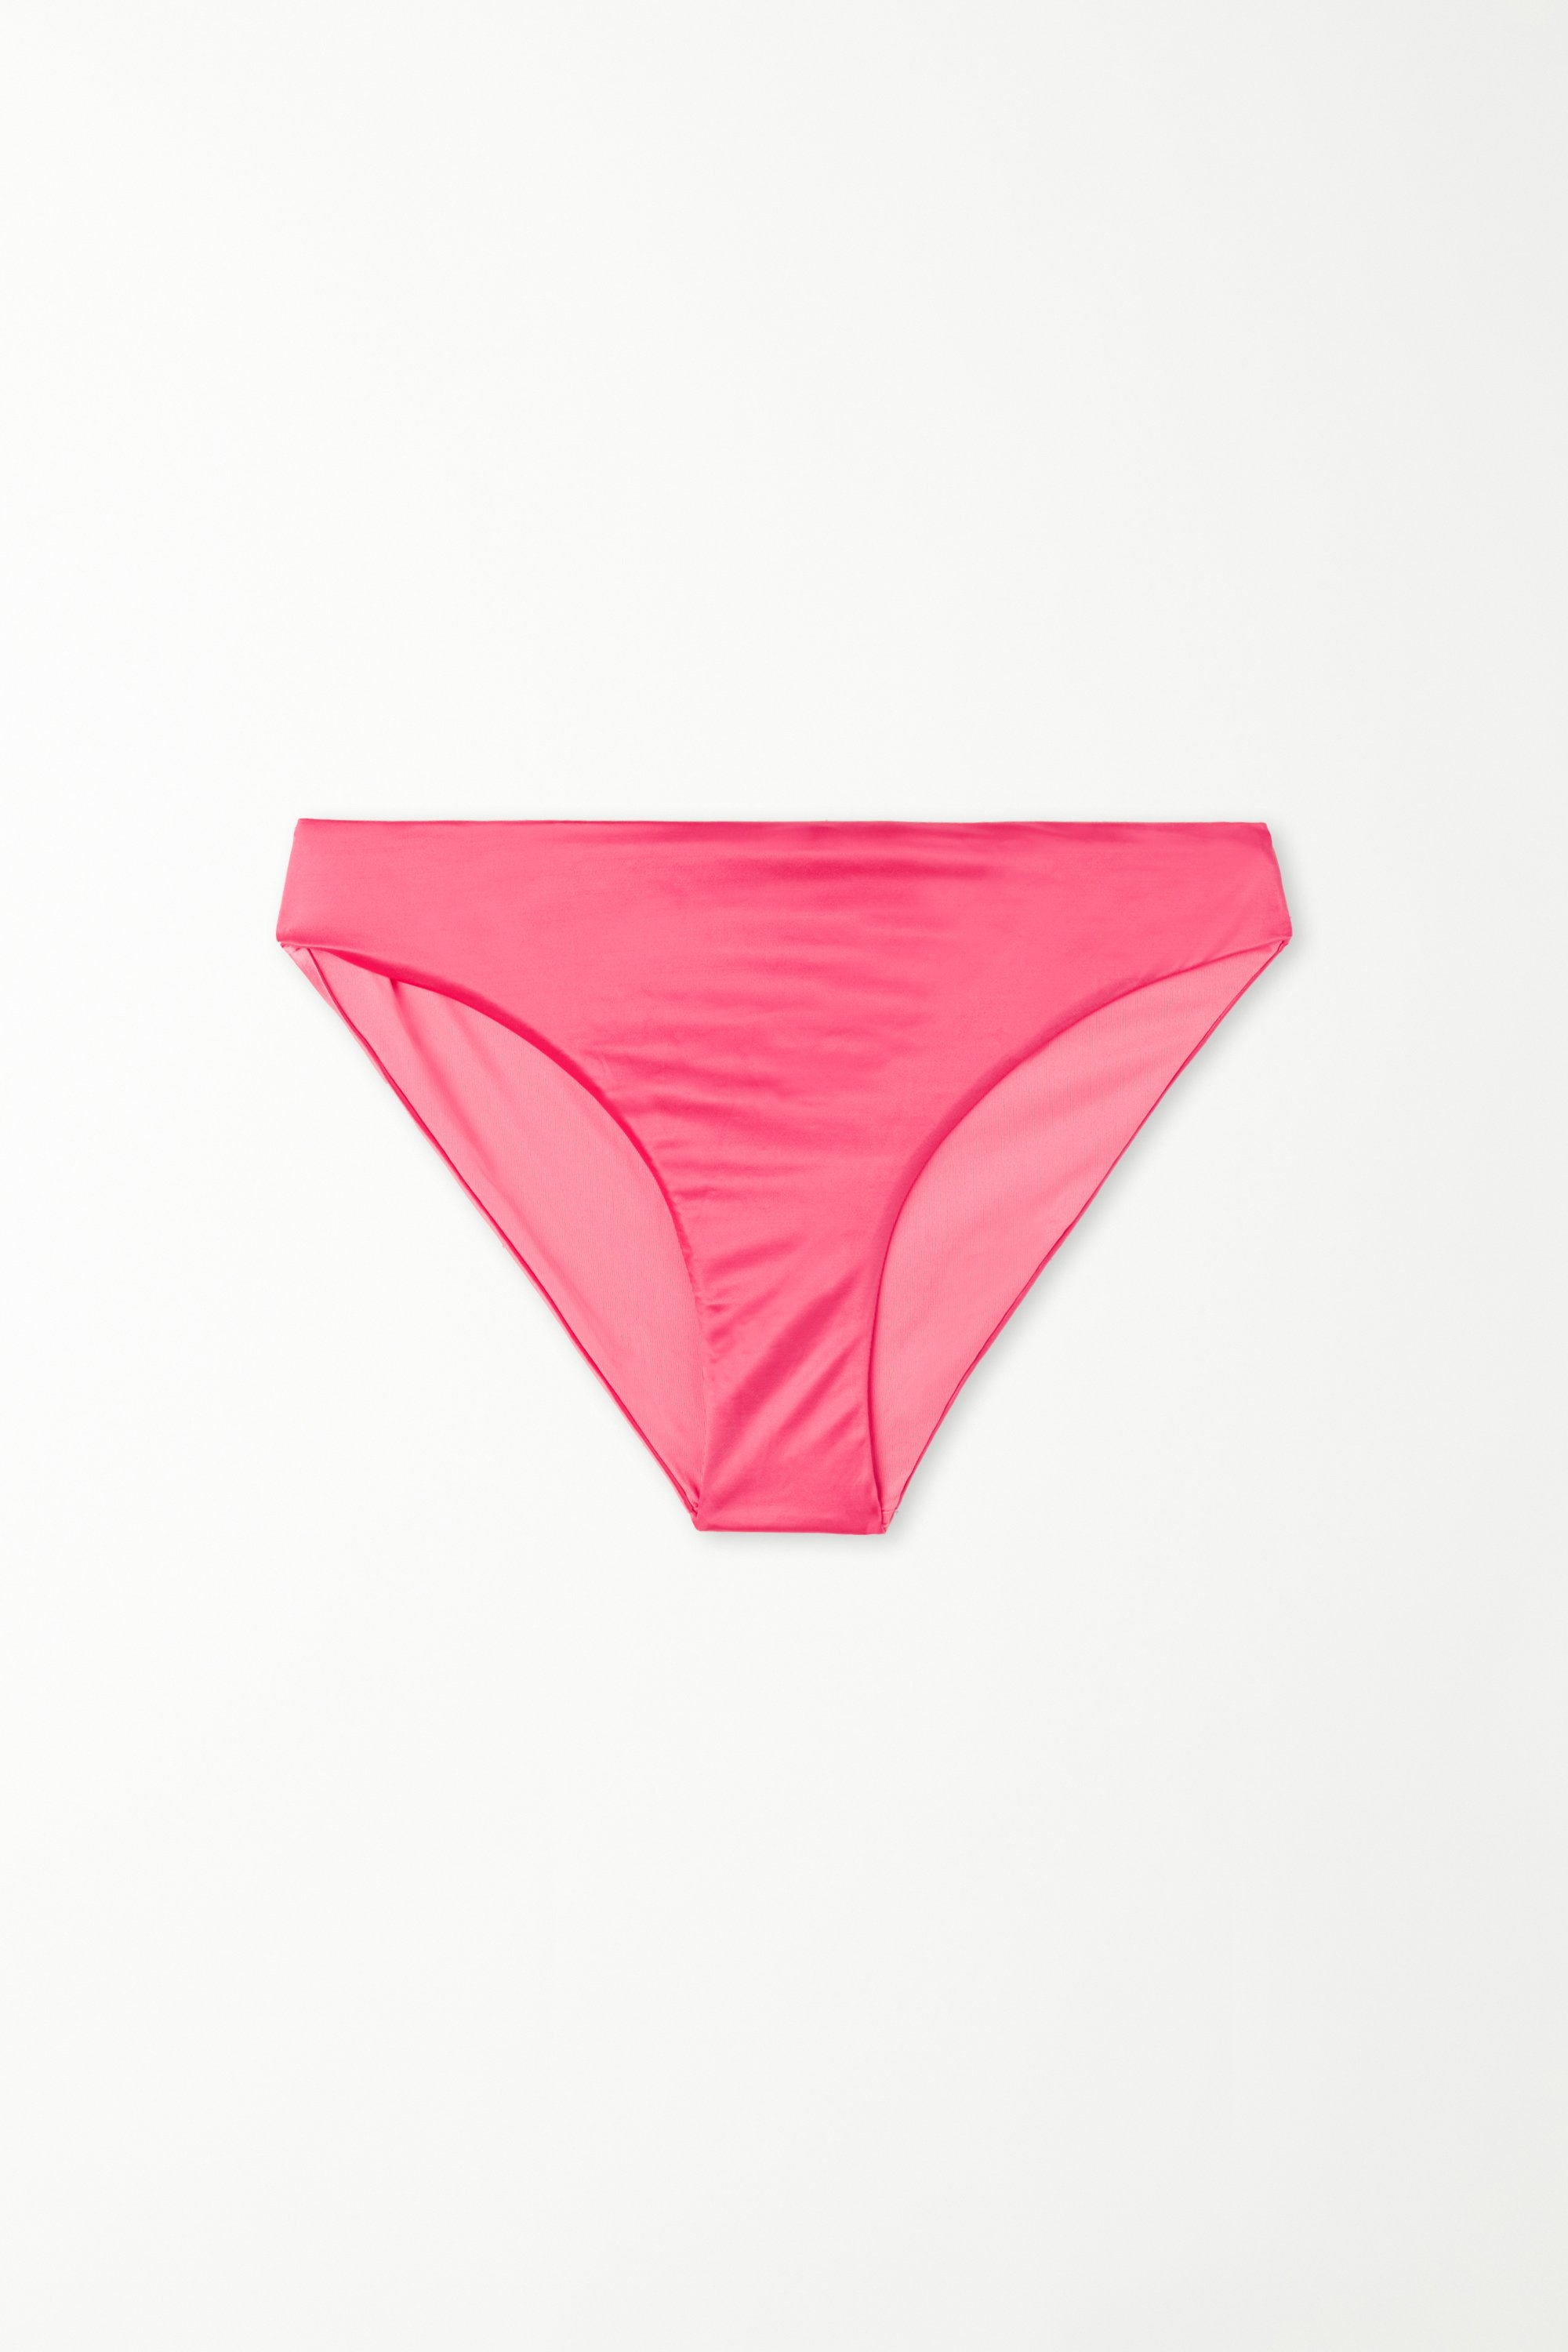 Klassischer, sommerlich rosafarbener Bikinislip Shiny